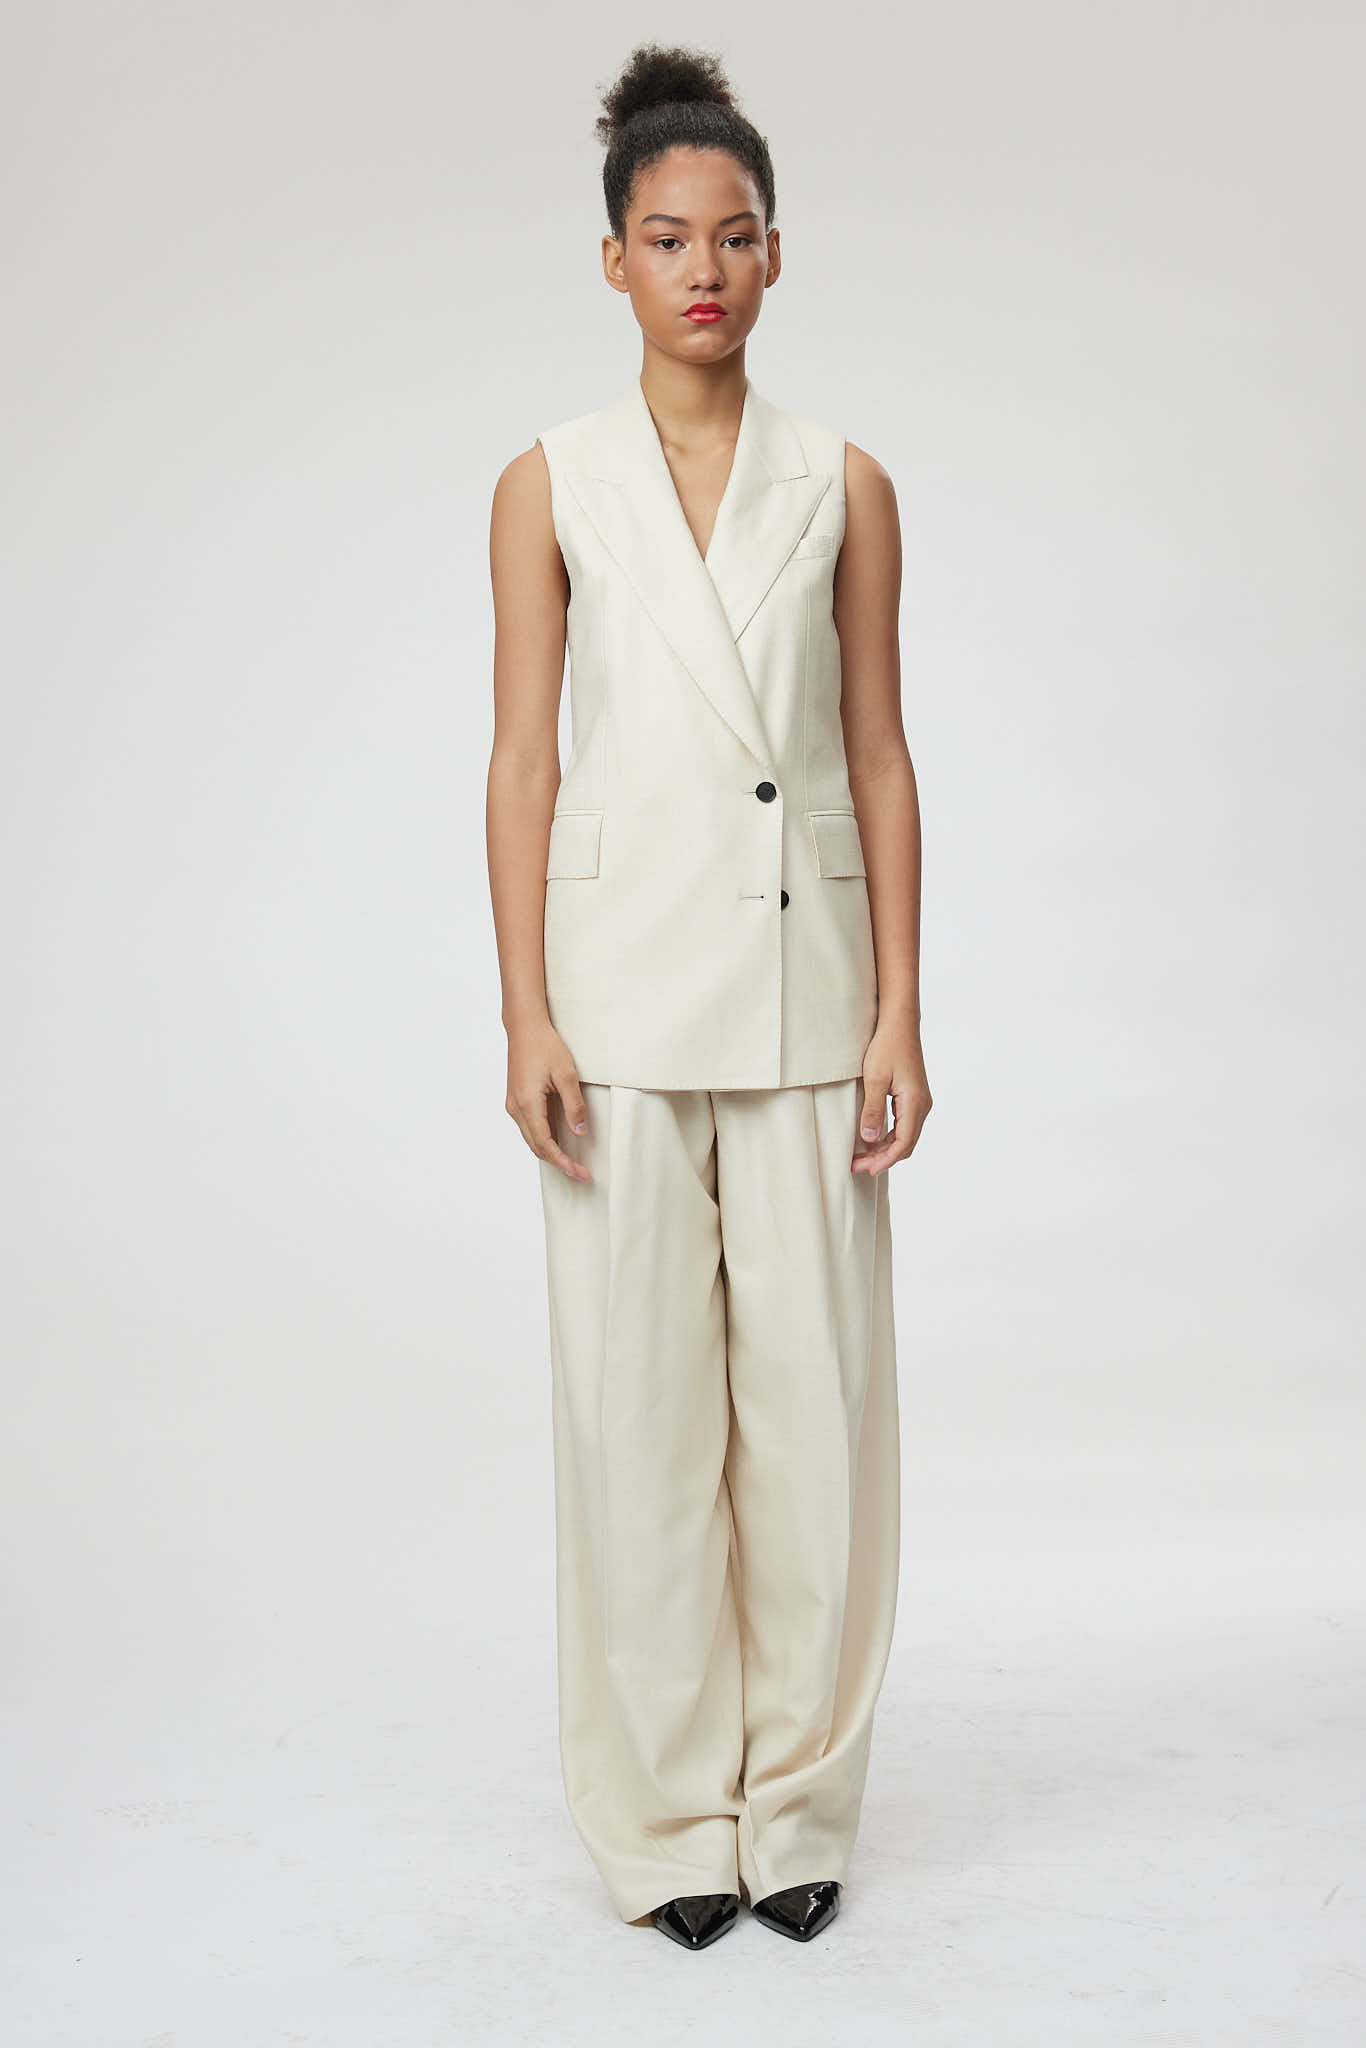 Naples Waistcoat – Loose fit sleeveless waistcoat in off white0